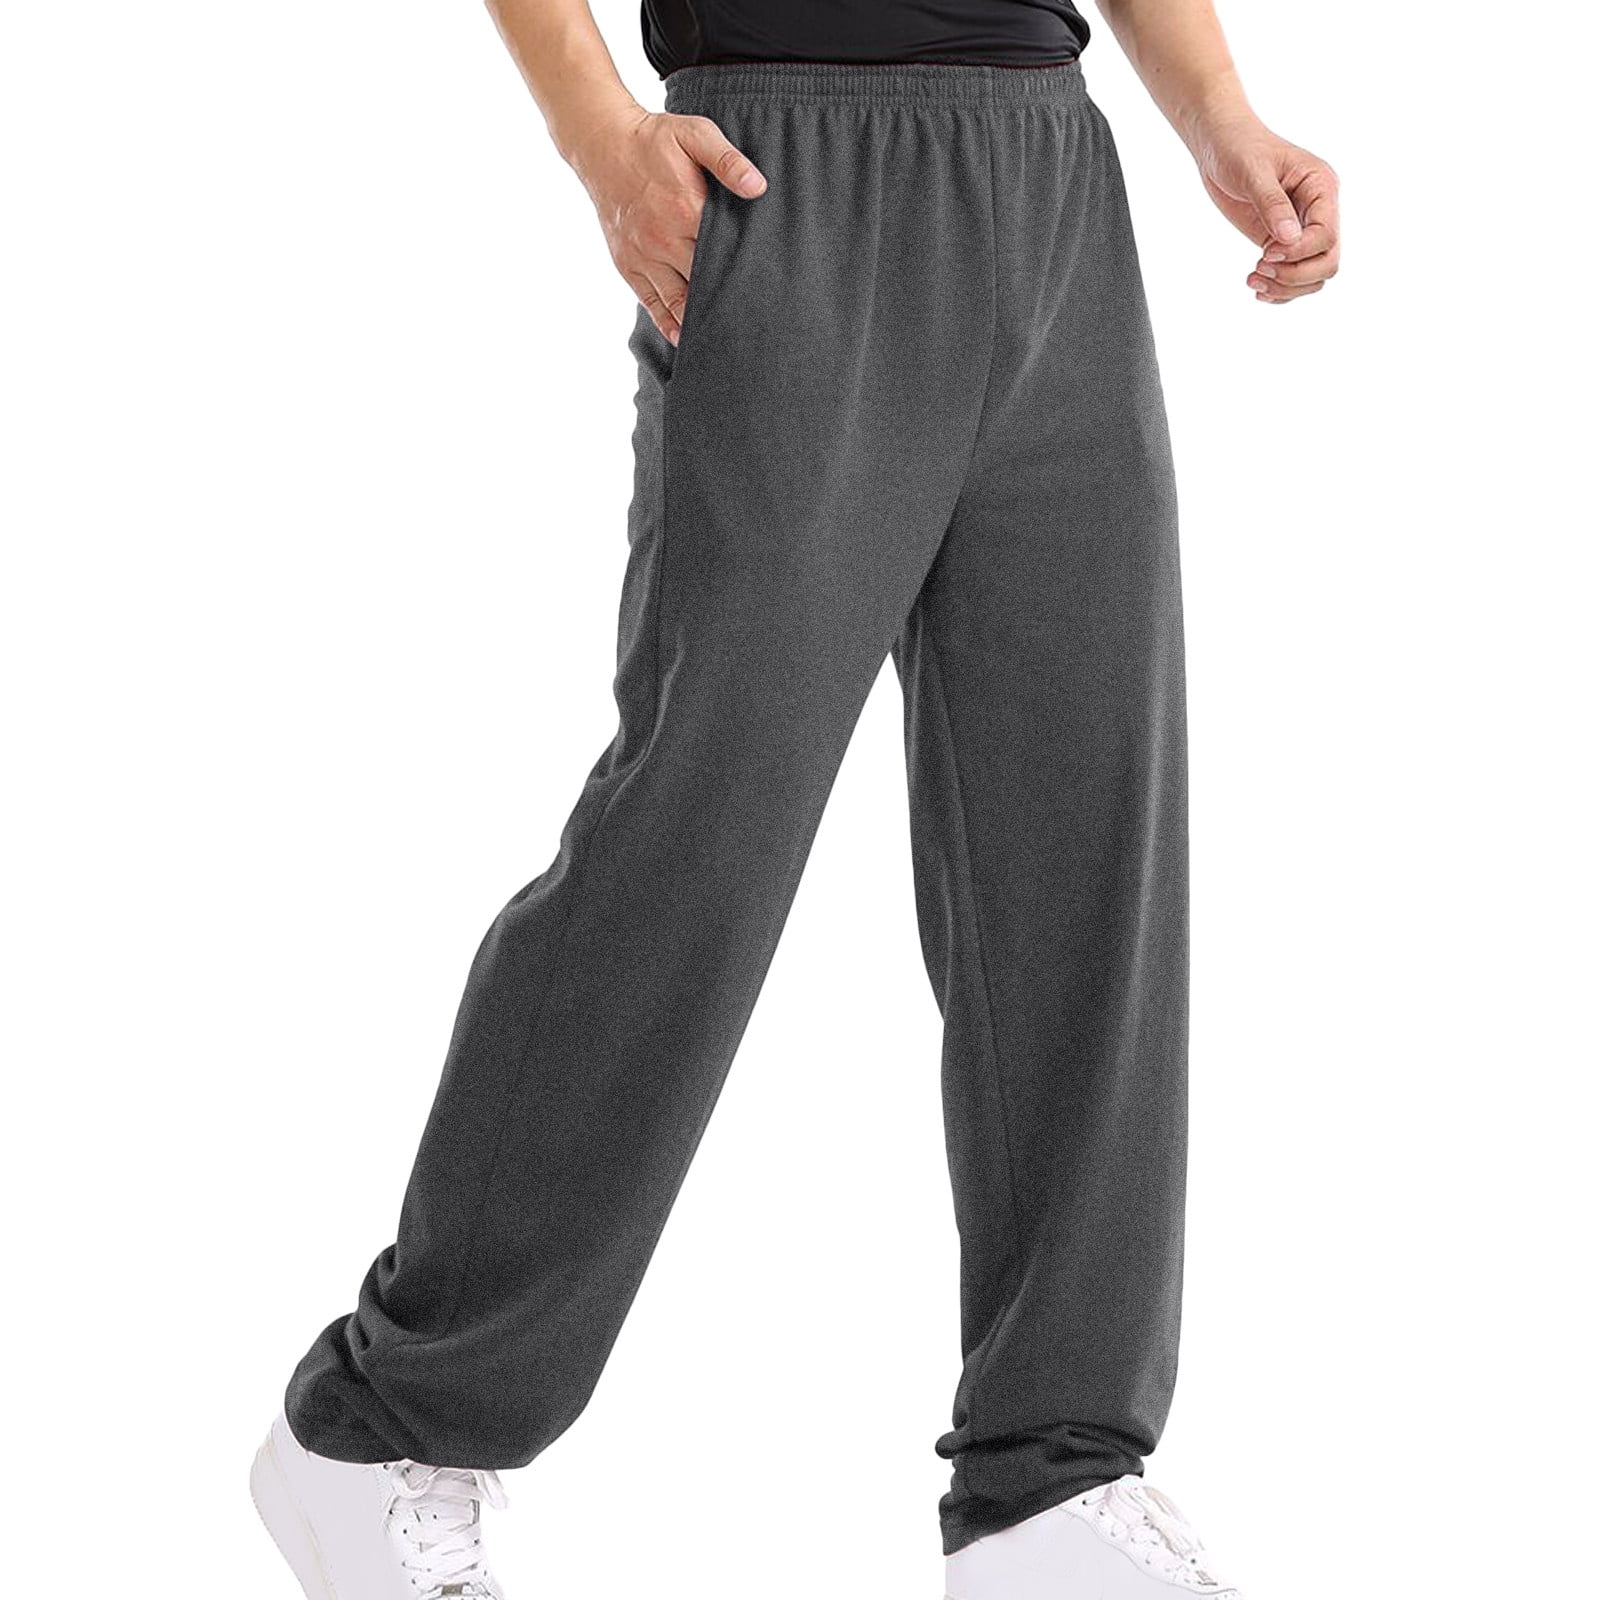 kpoplk Sweatpants Men,Mens Sweatpants Running Stretch Drawstring Pocket  Sweatpants Gym Pants Sports Joggers Running Sweat Pants(Dark Gray,M)